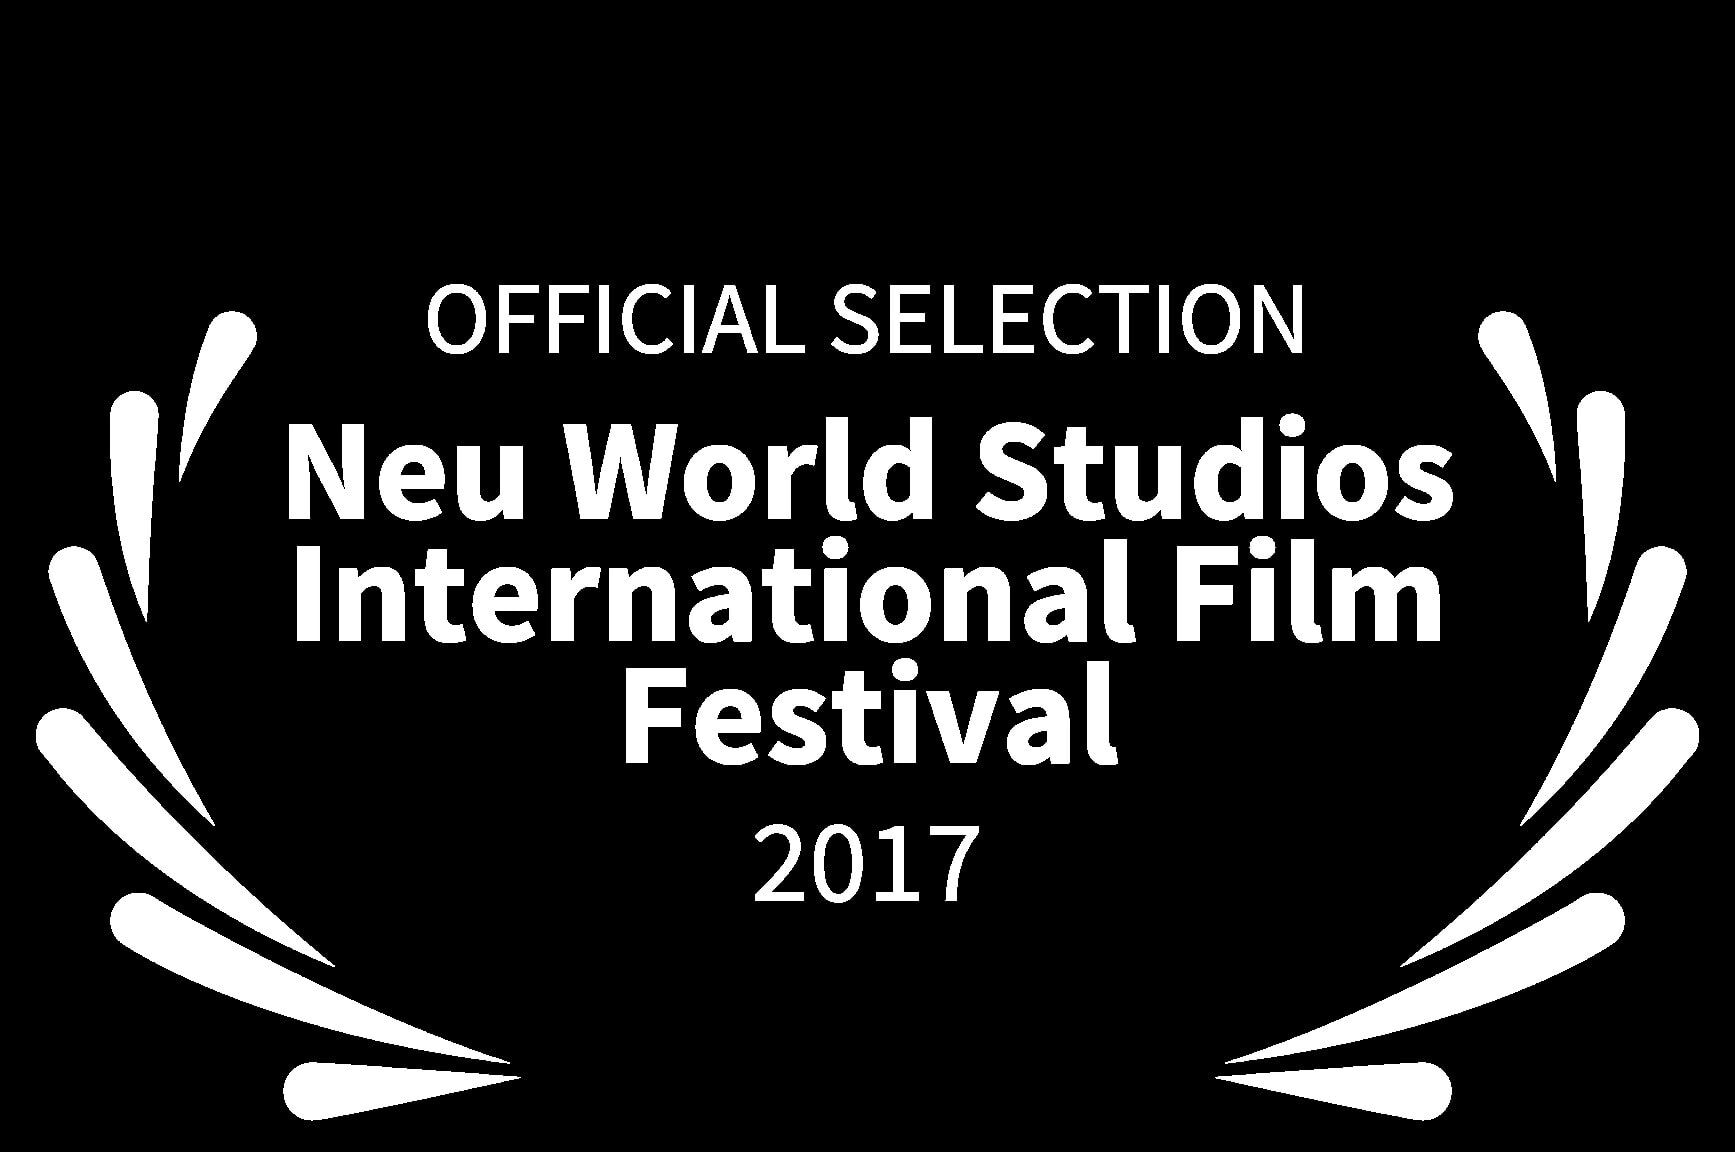 OFFICIAL SELECTION - Neu World Studios International Film Festival - 2017 - ICE INC.